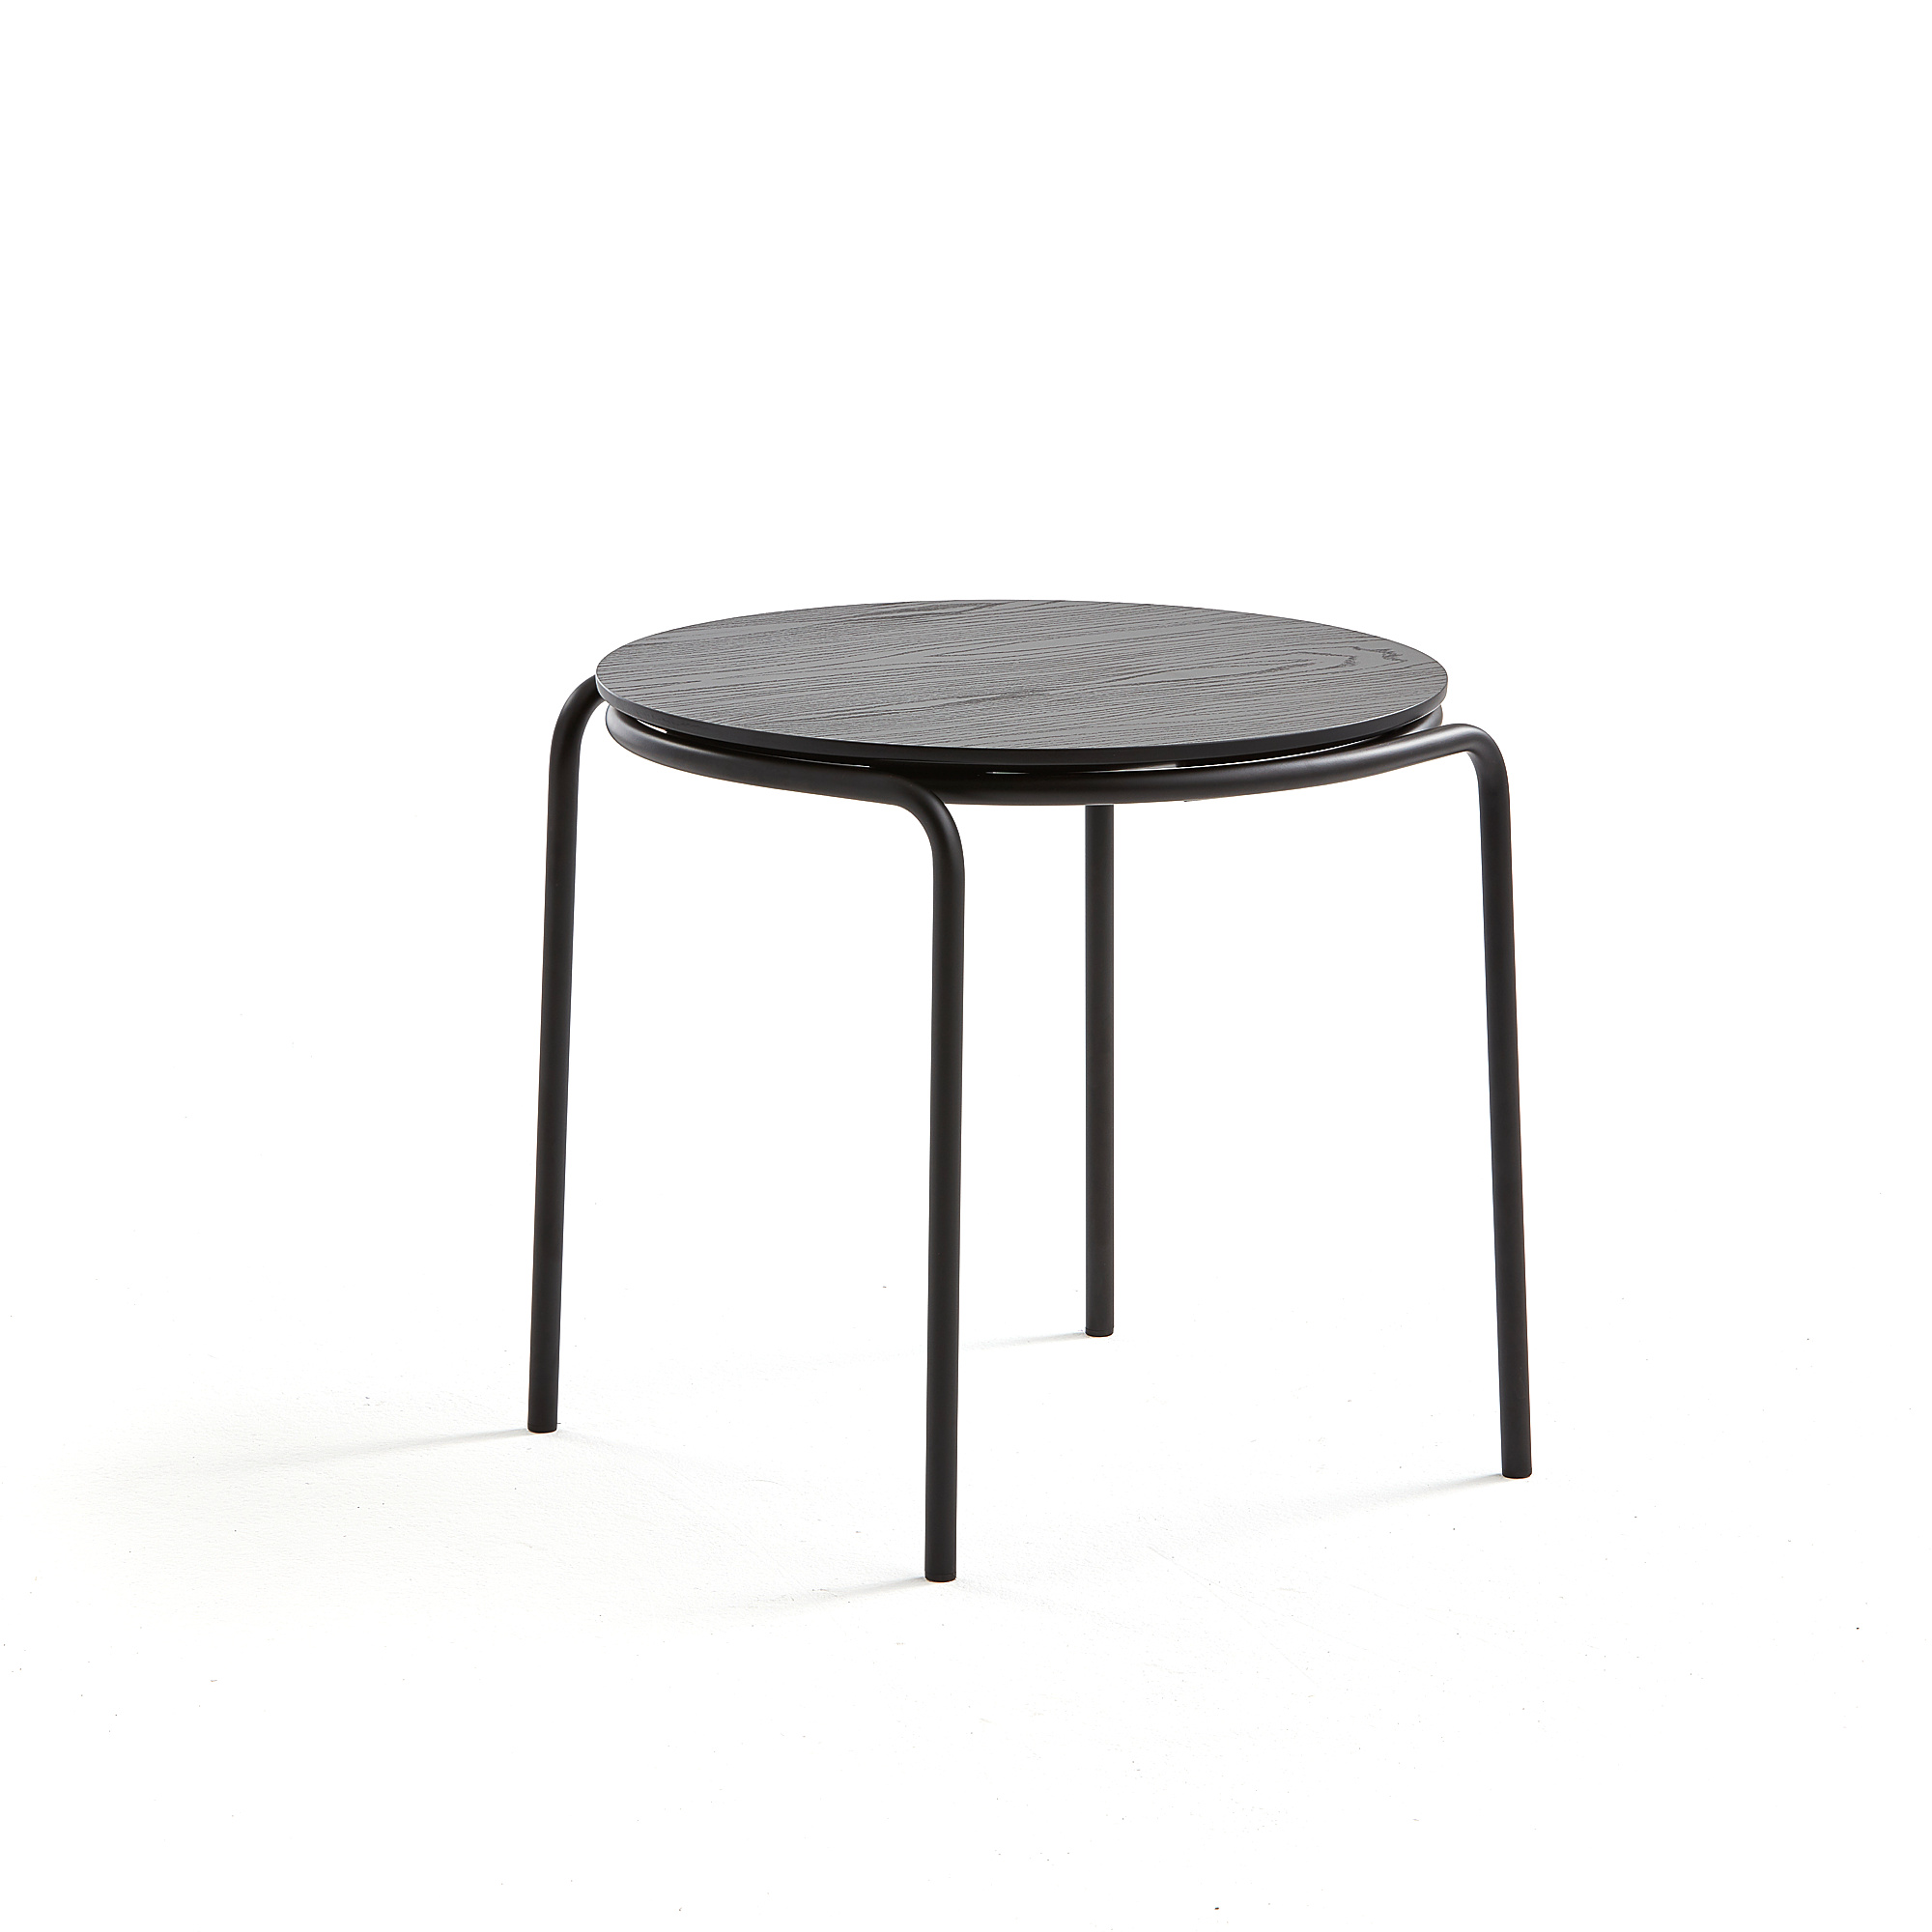 E-shop Konferenčný stolík Ashley, Ø570 x 470 mm, čierna, čierna